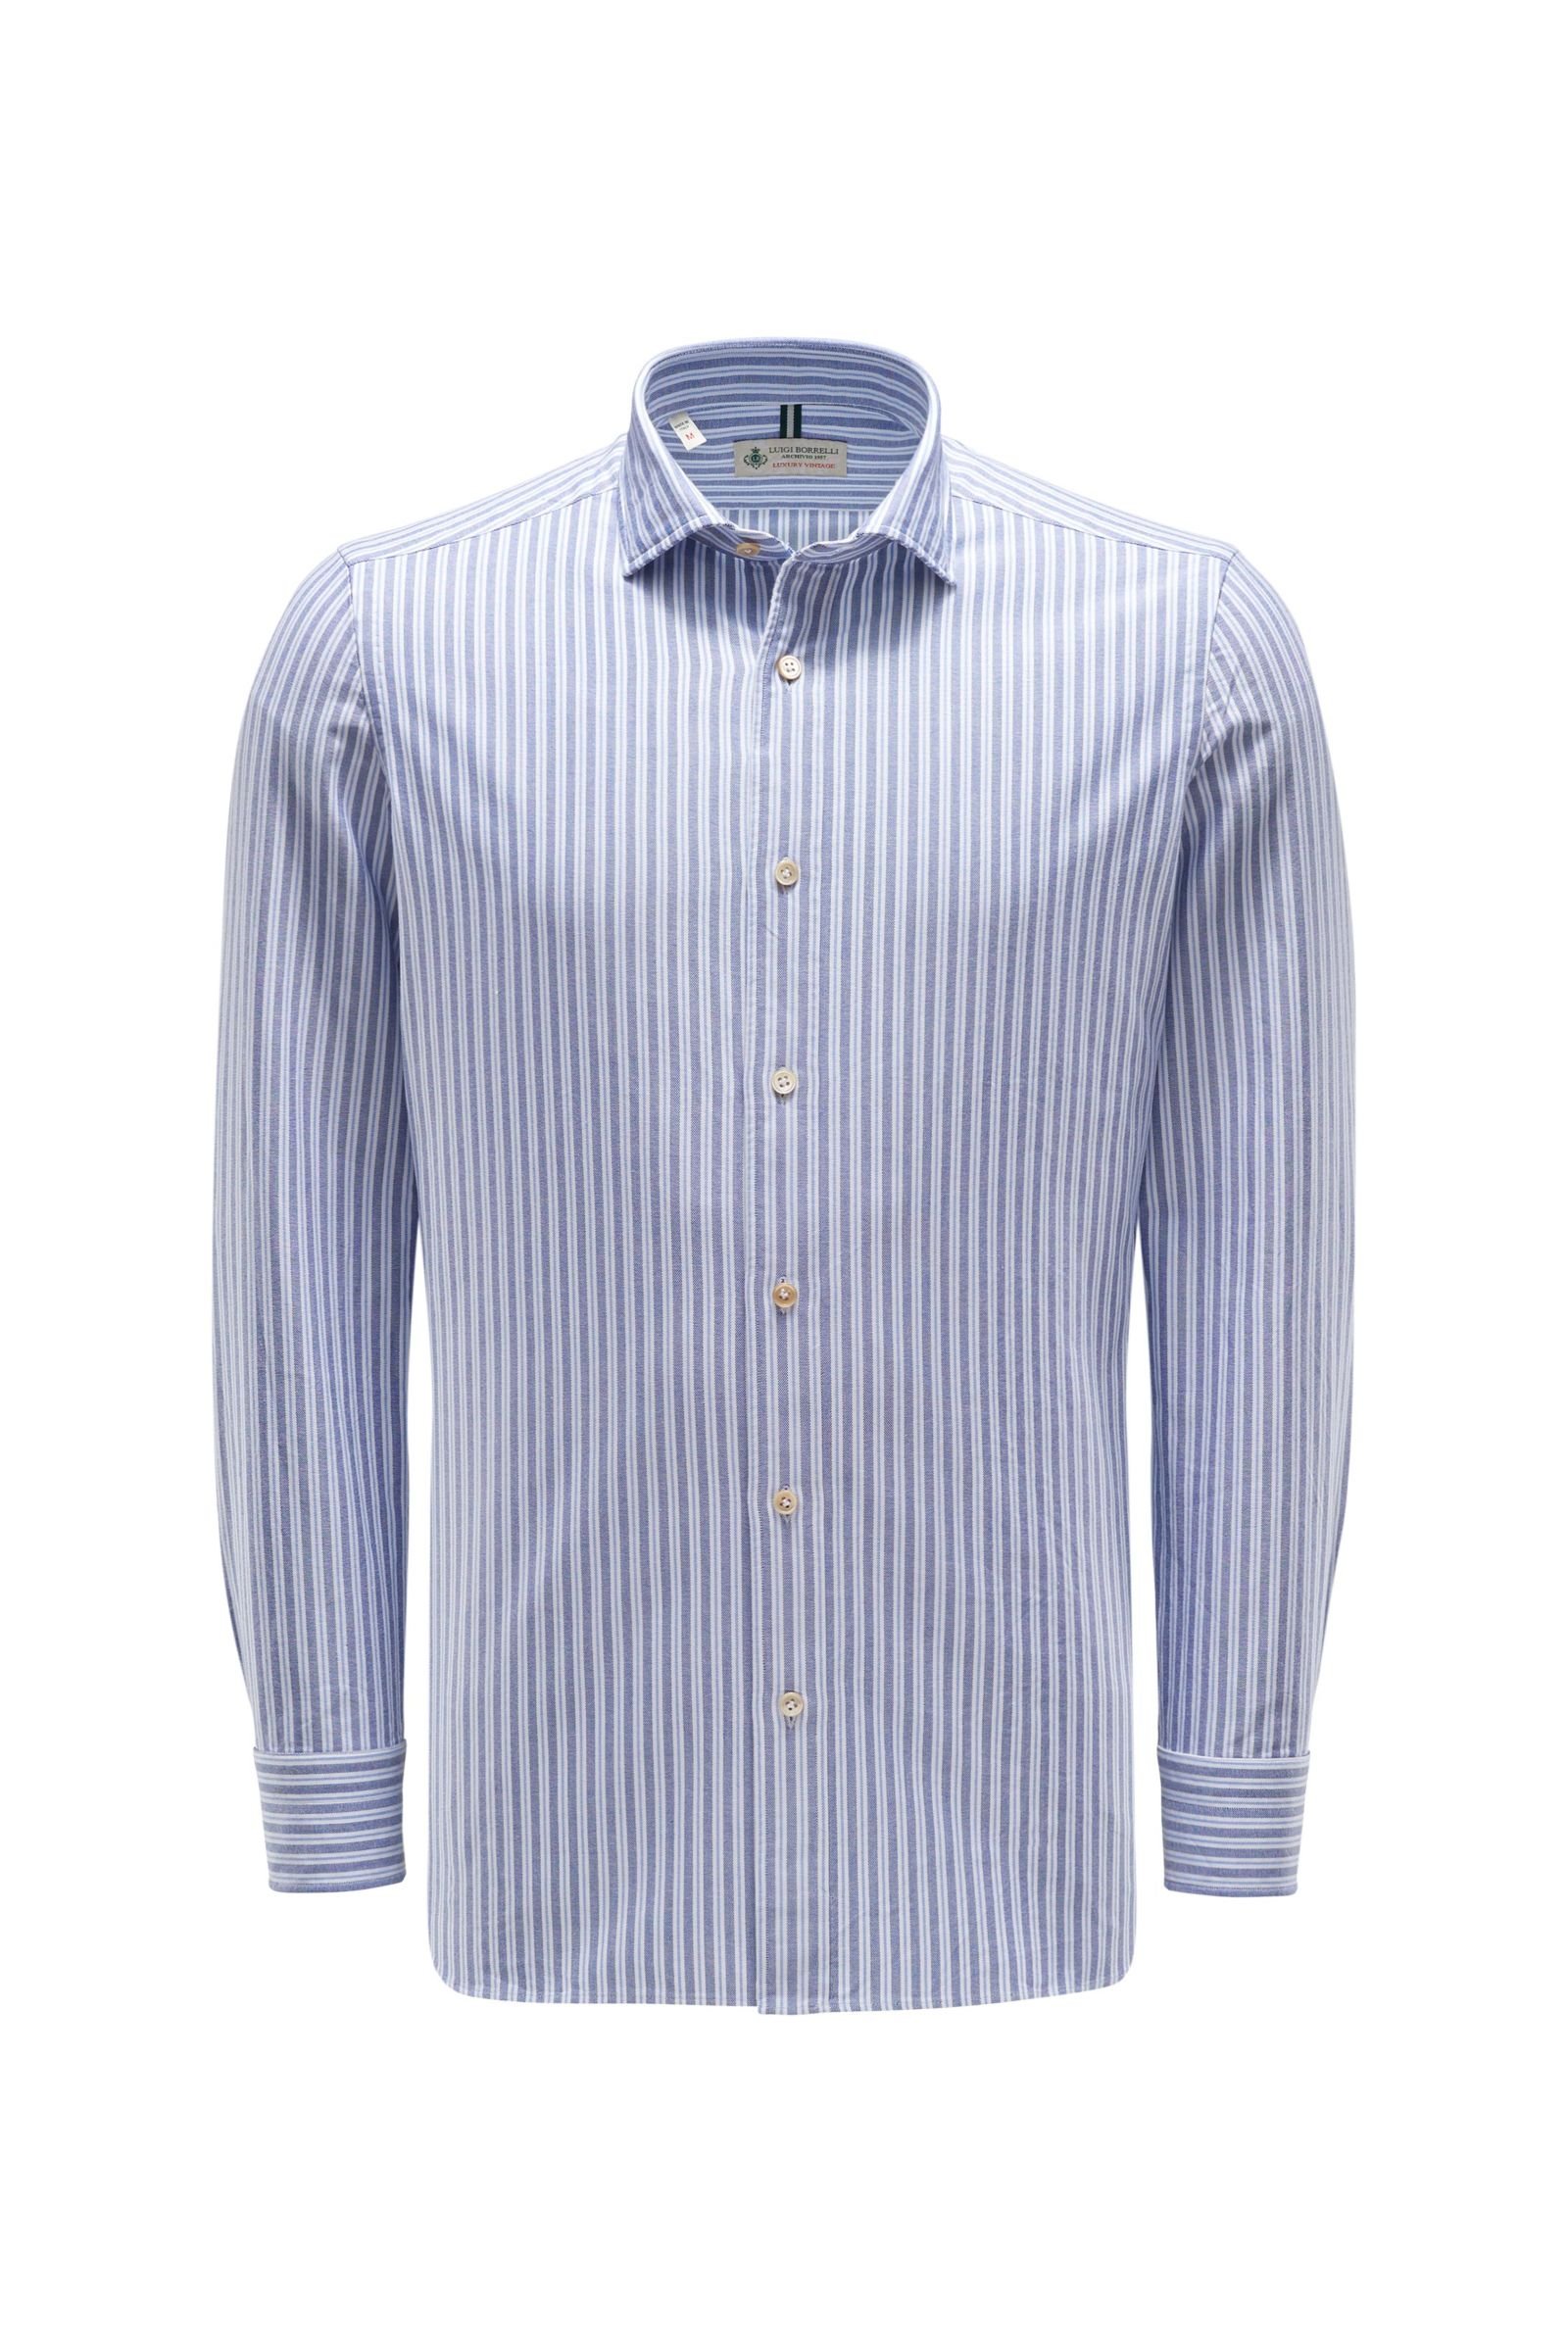 Casual shirt slim collar grey-blue/white striped